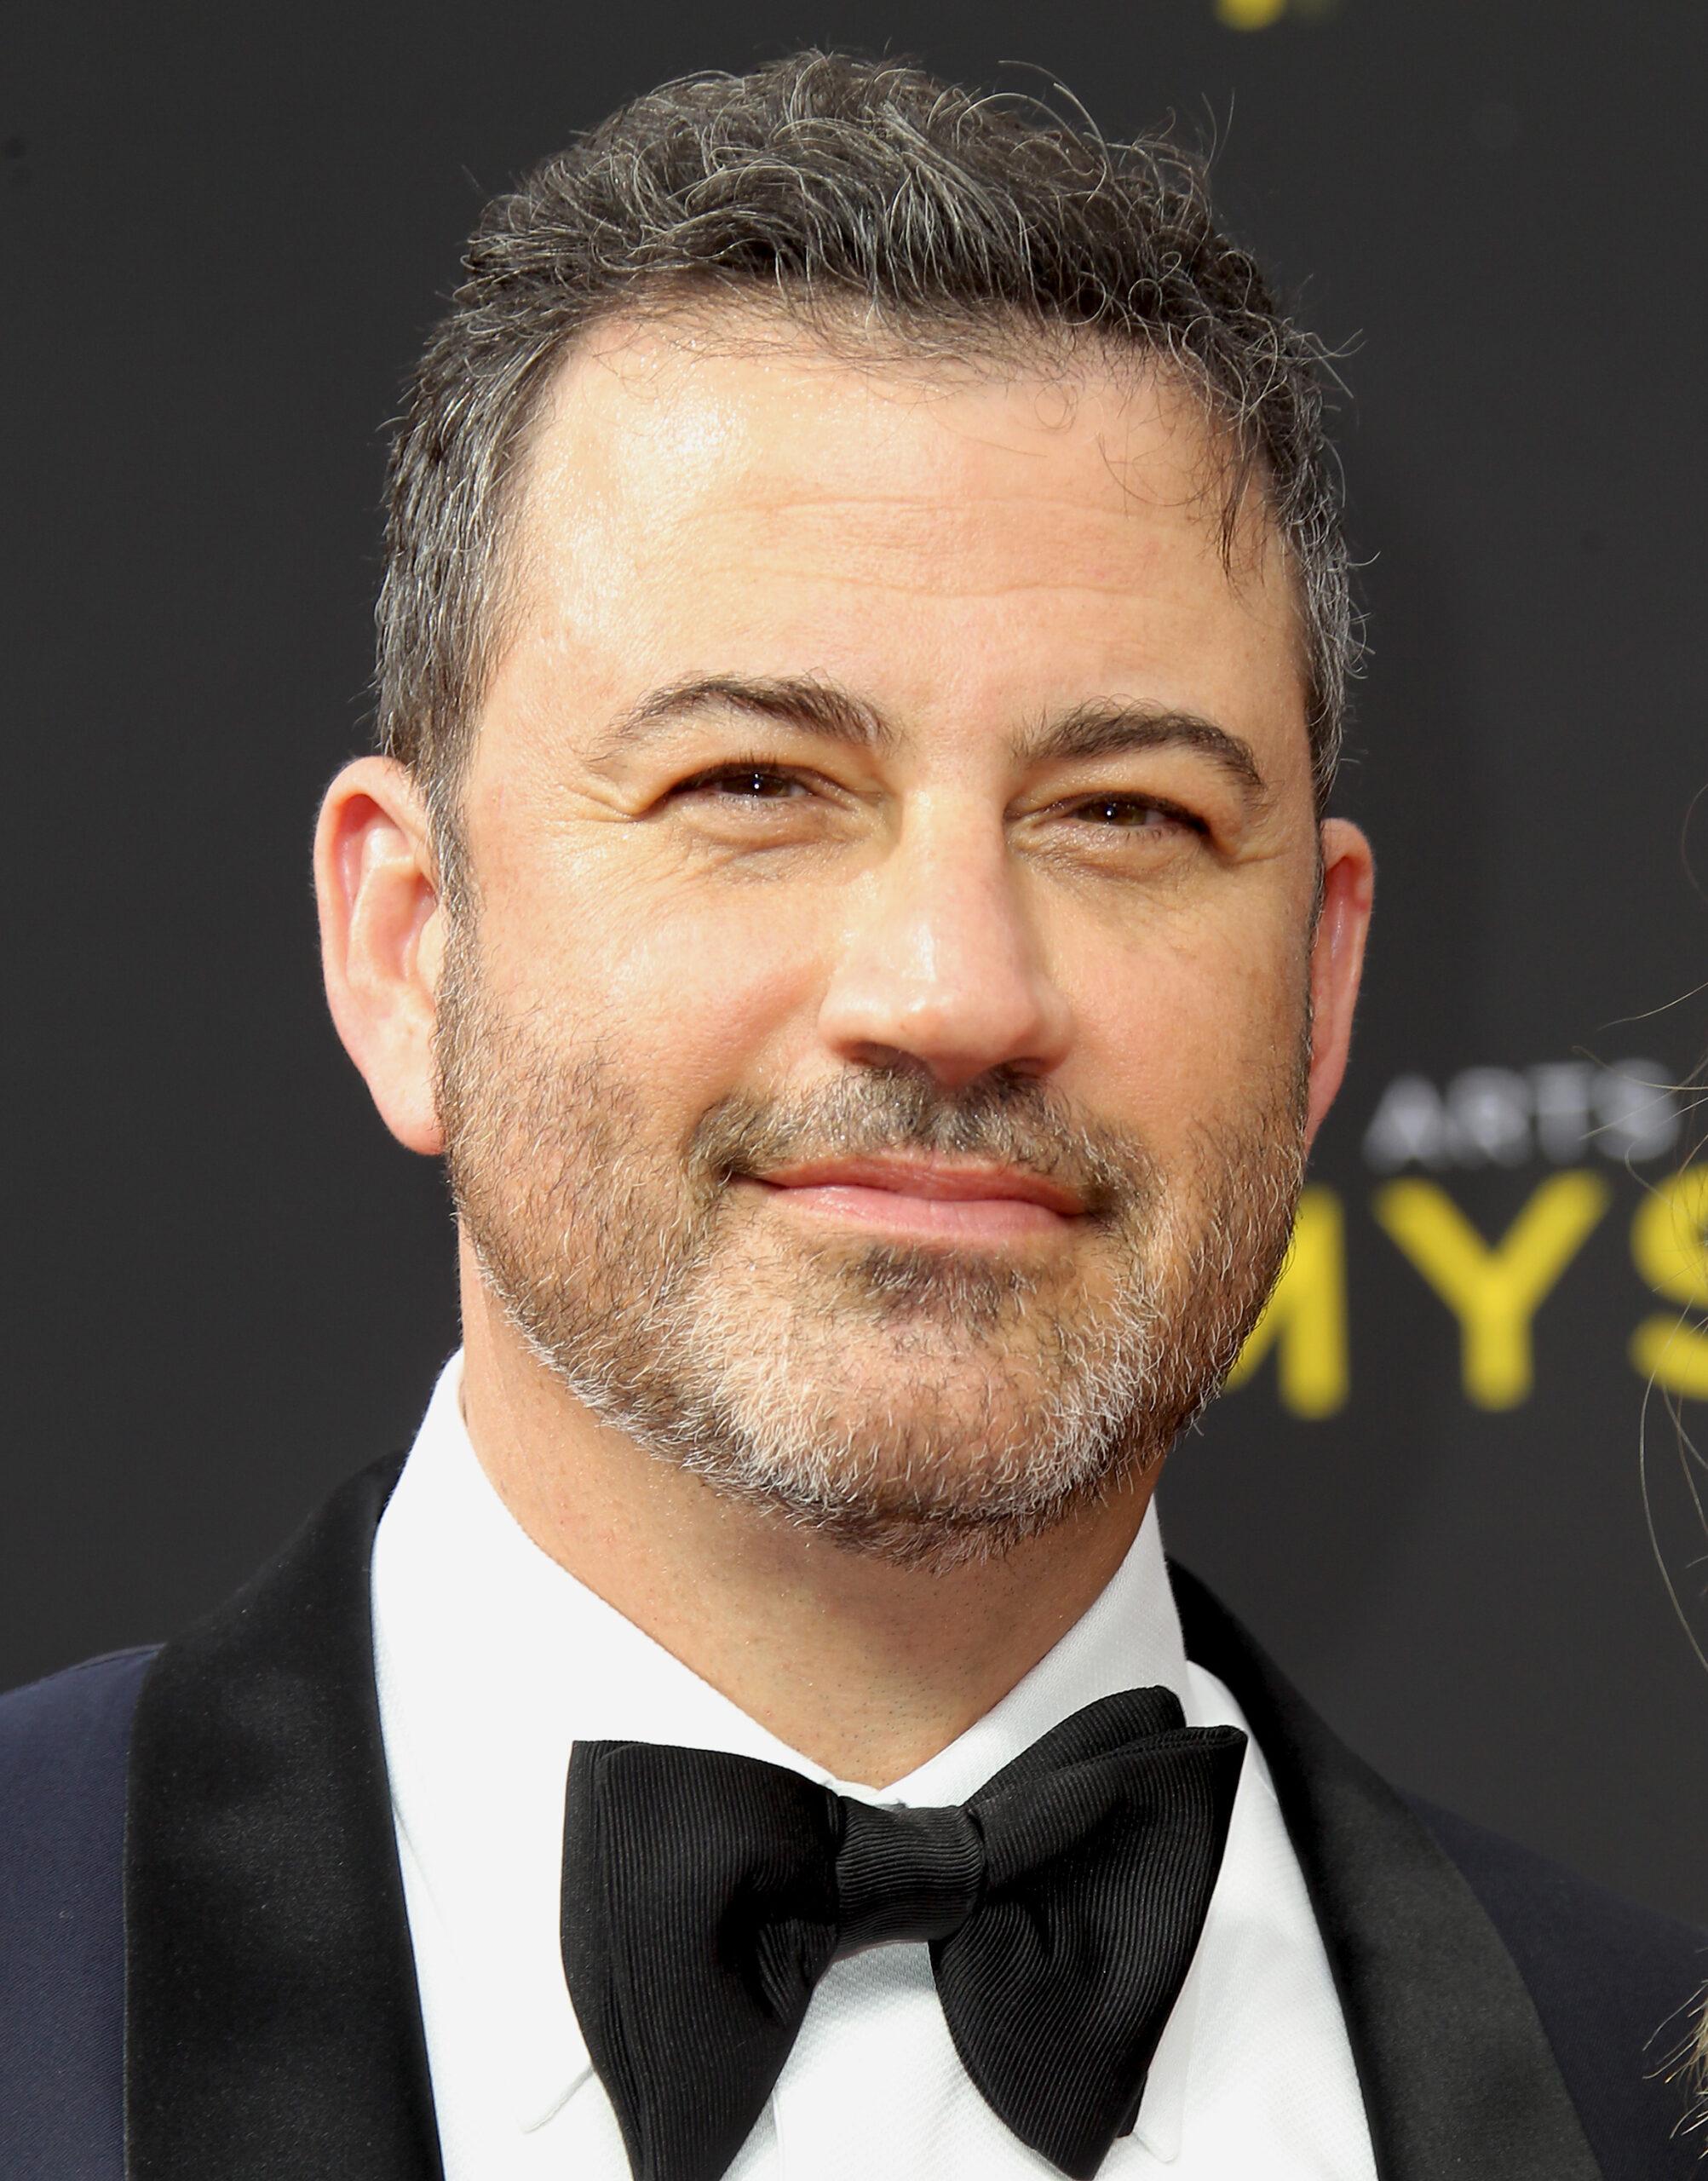 Jimmy Kimmel Creative Arts Emmy 2019 - chegadas do primeiro dia